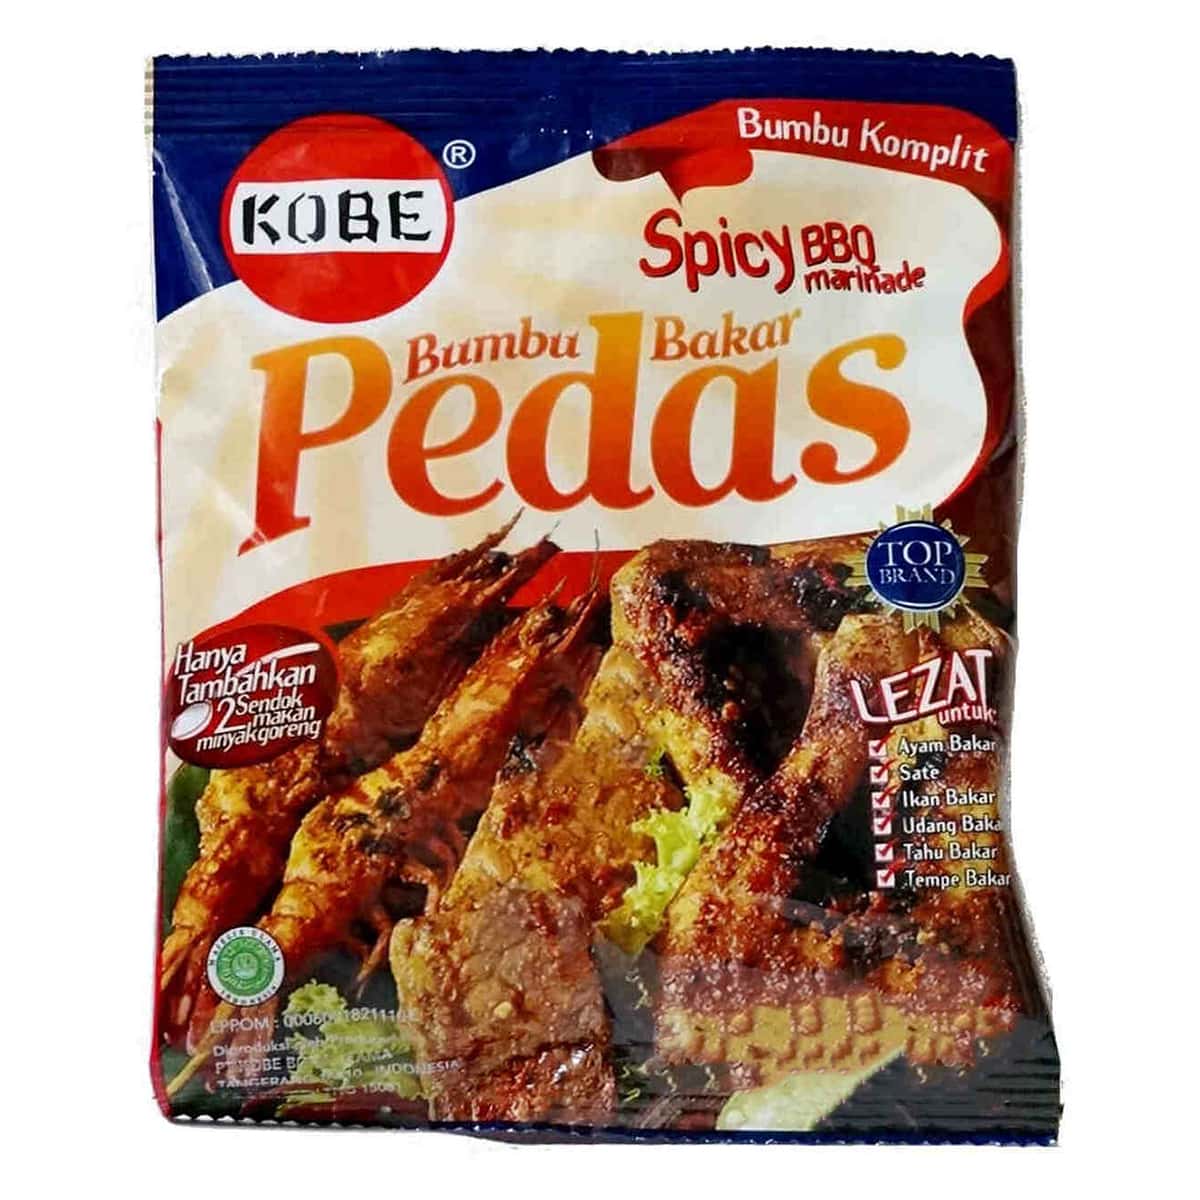 Buy Kobe Bumbu Bakar Pedas (Spicy BBQ Marinade Mix) - 60 gm